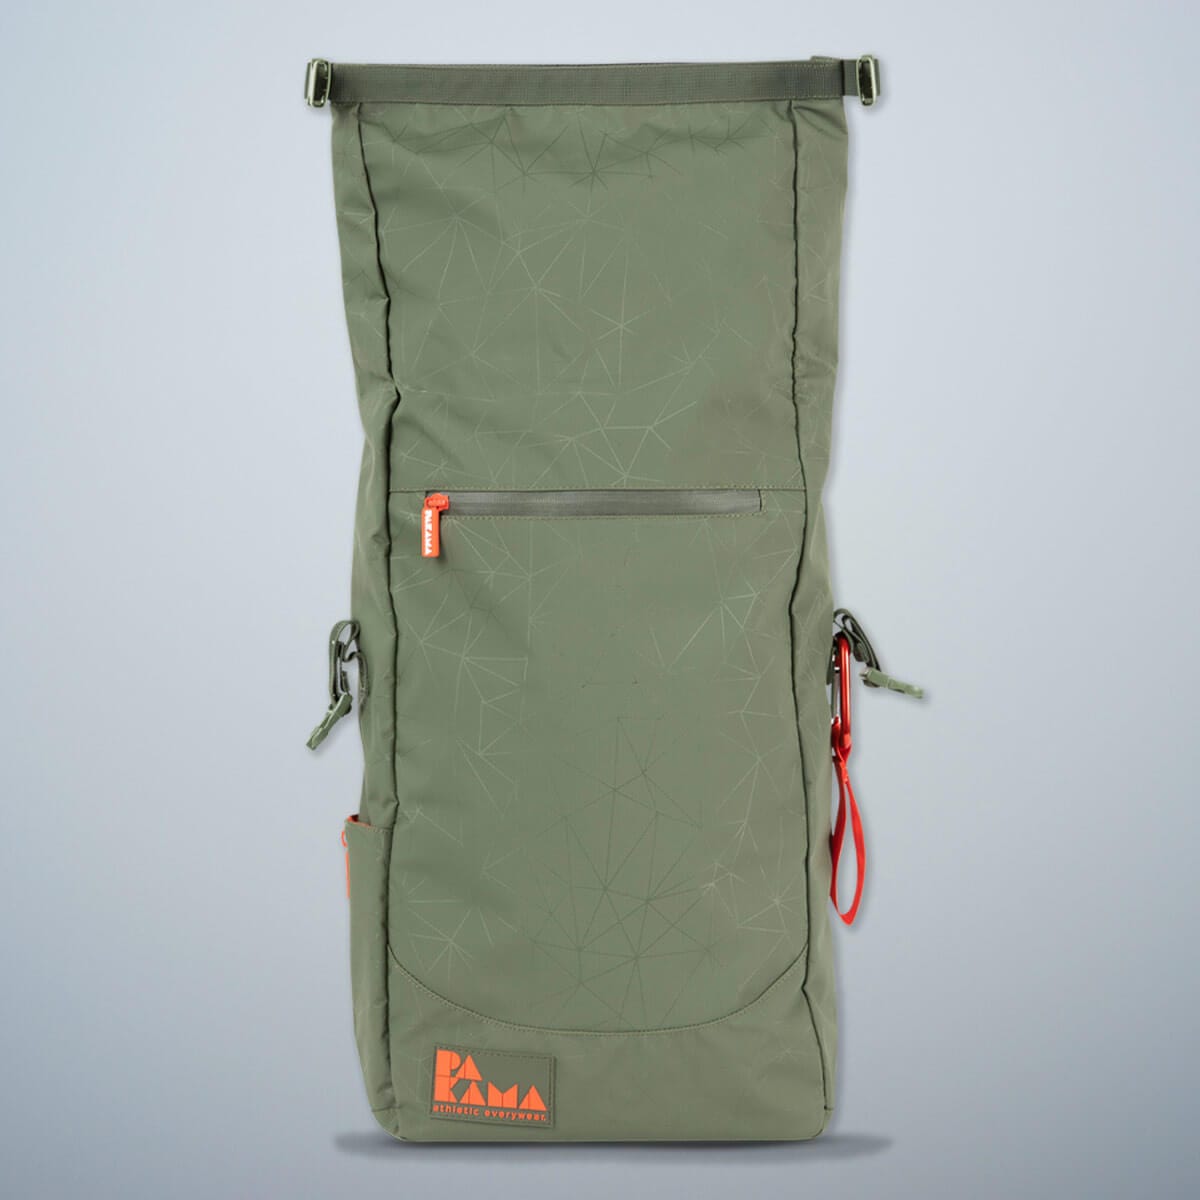 PAKAMA-fitness rucksack-gruen-front-rolltop-geöffnet